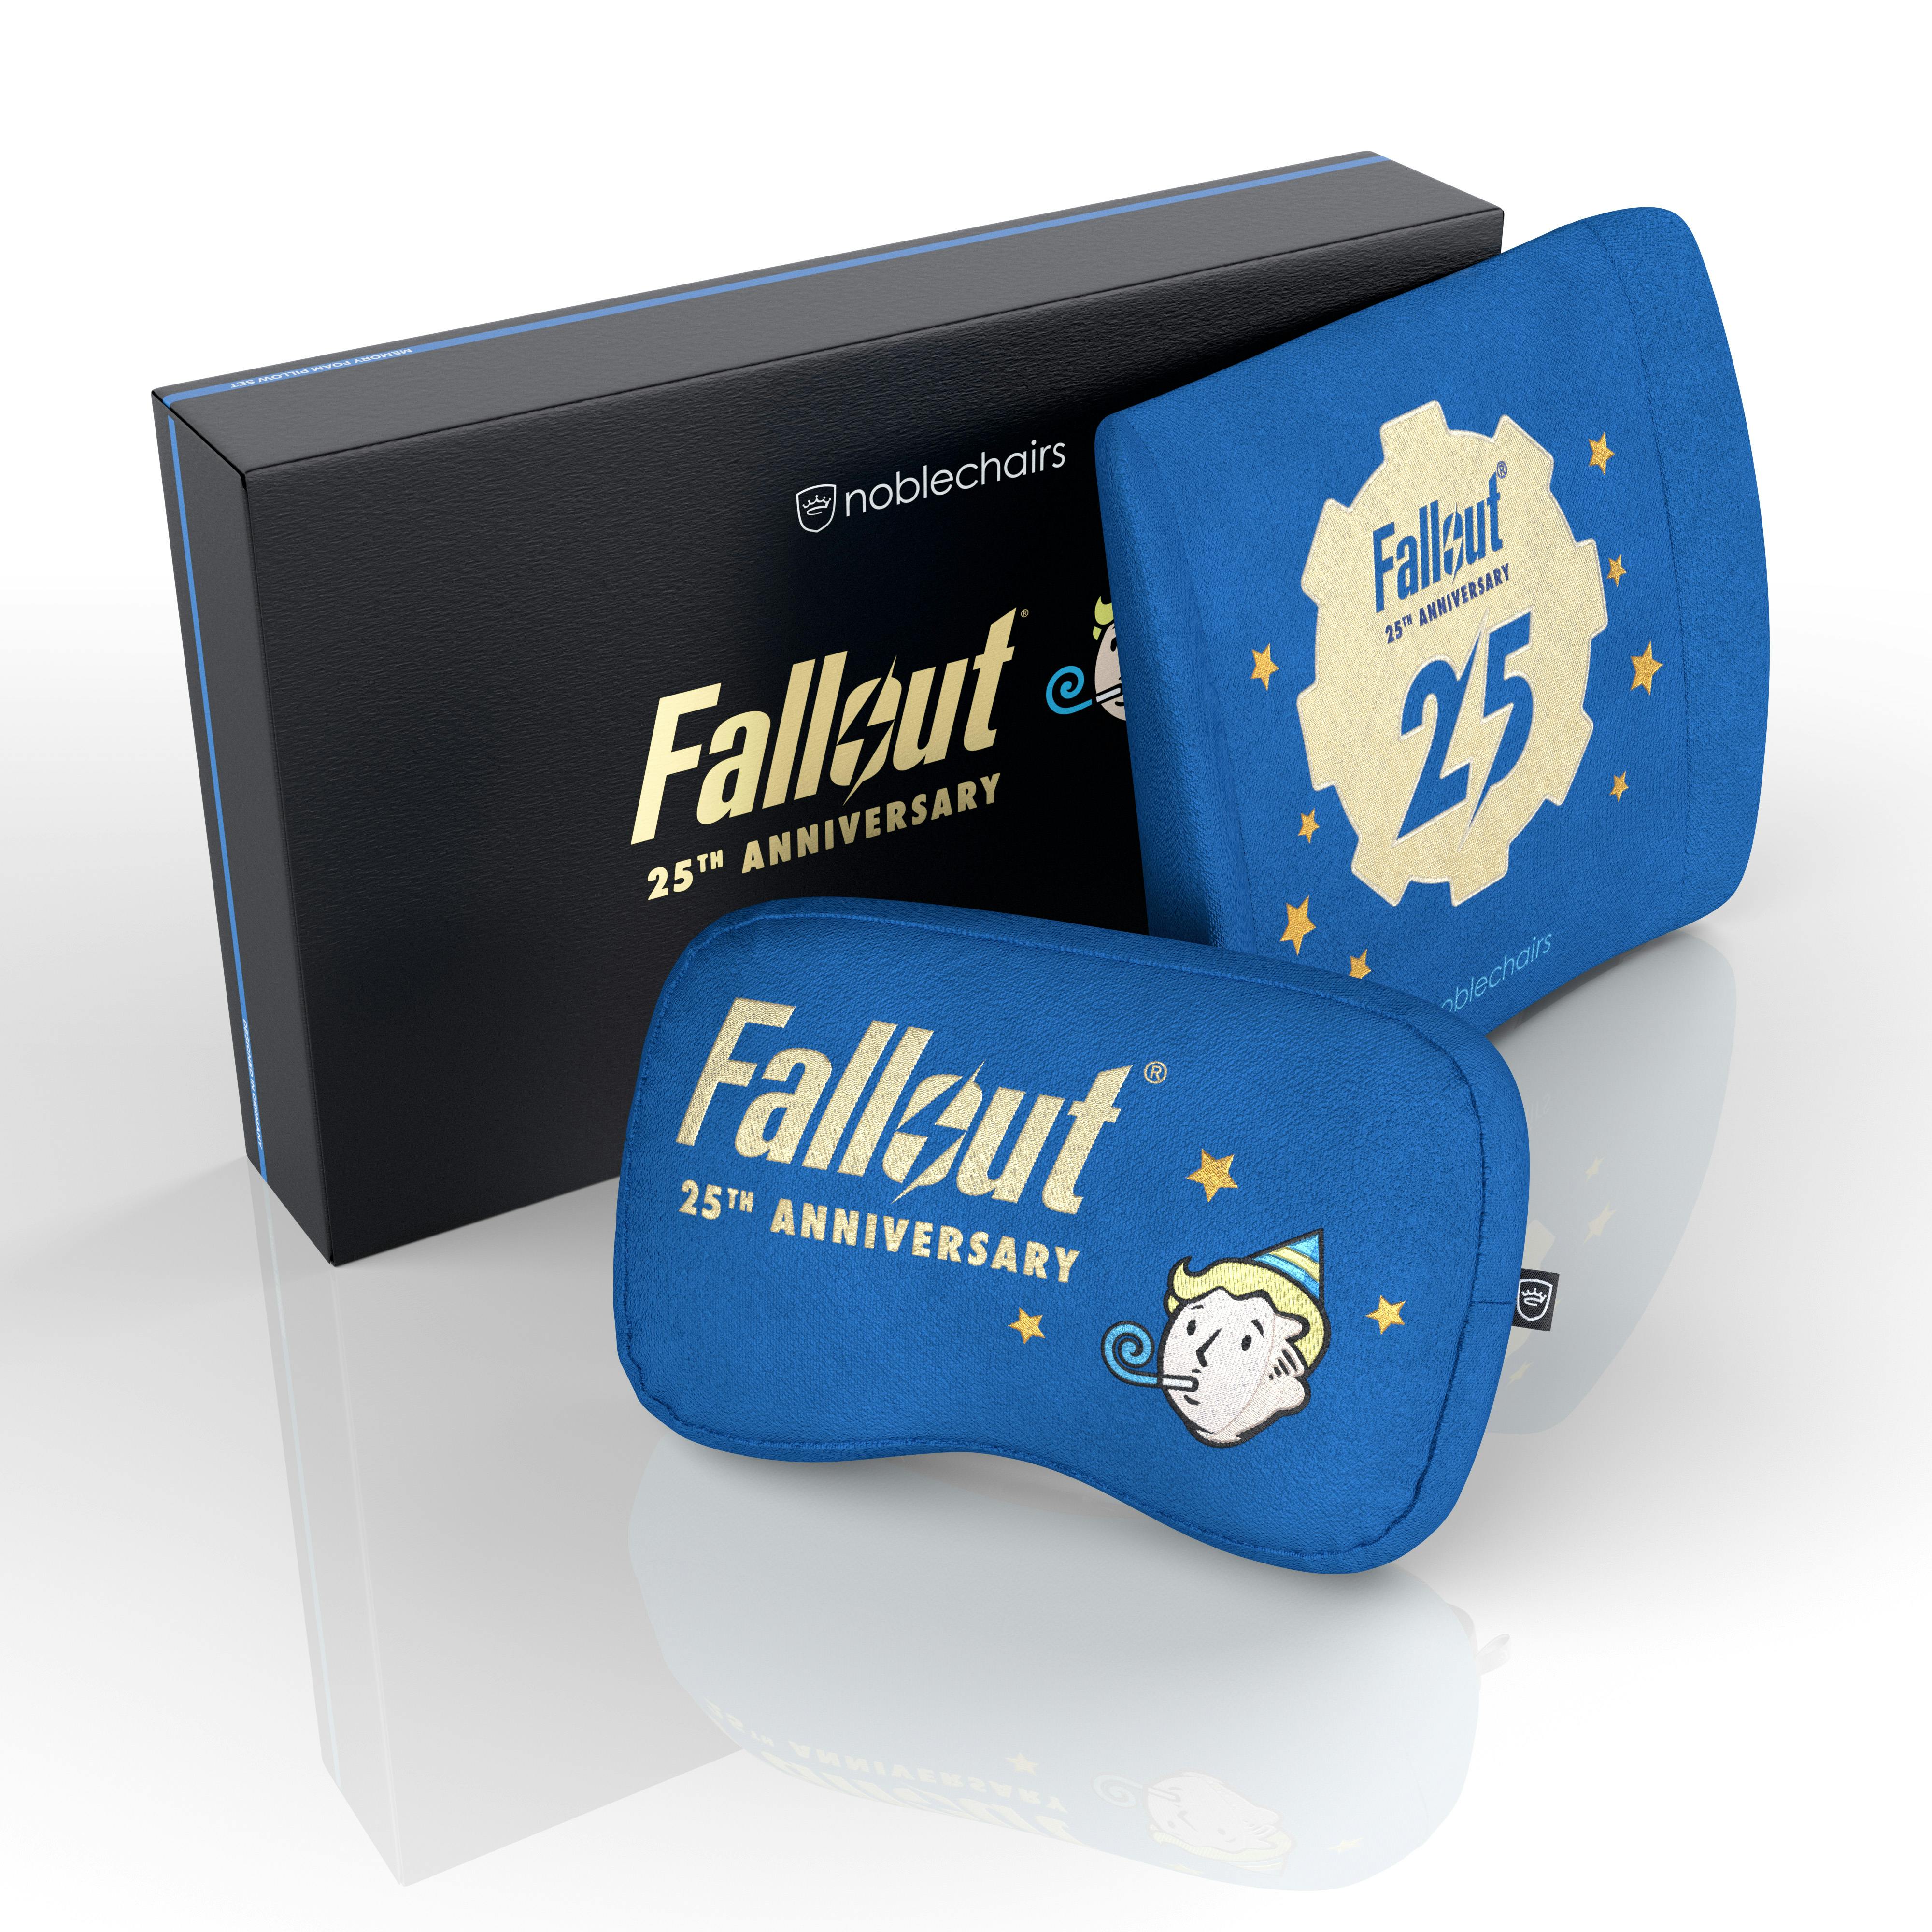 noblechairs - Cojín de espuma de memoria Set de almohadas de la edición del 25º aniversario de Fallout 